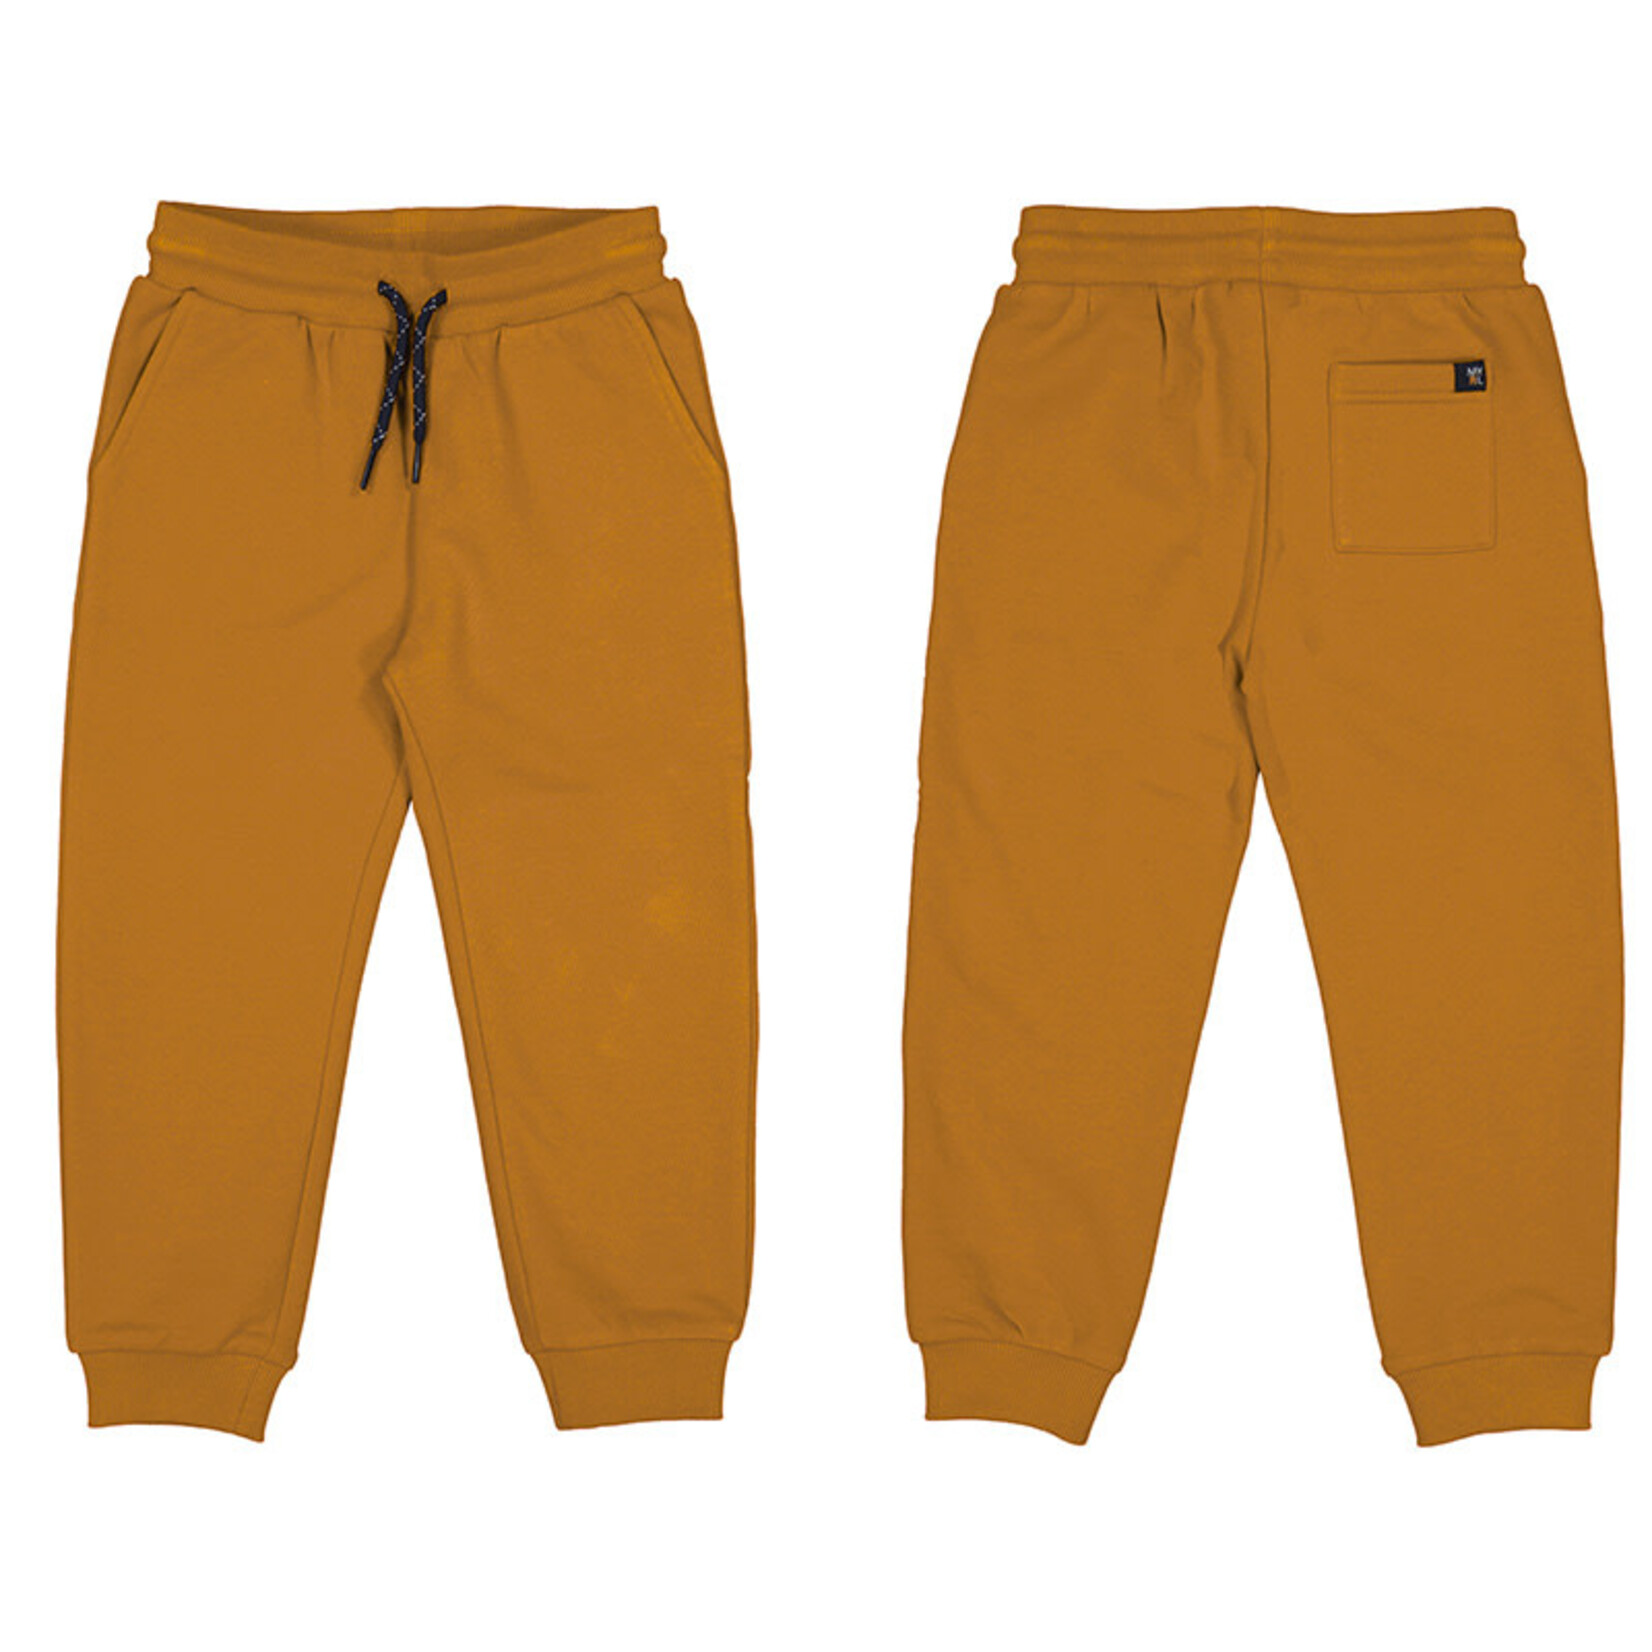 Mayoral MAYORAL - Burnt orange jogger pants with adjustable cord